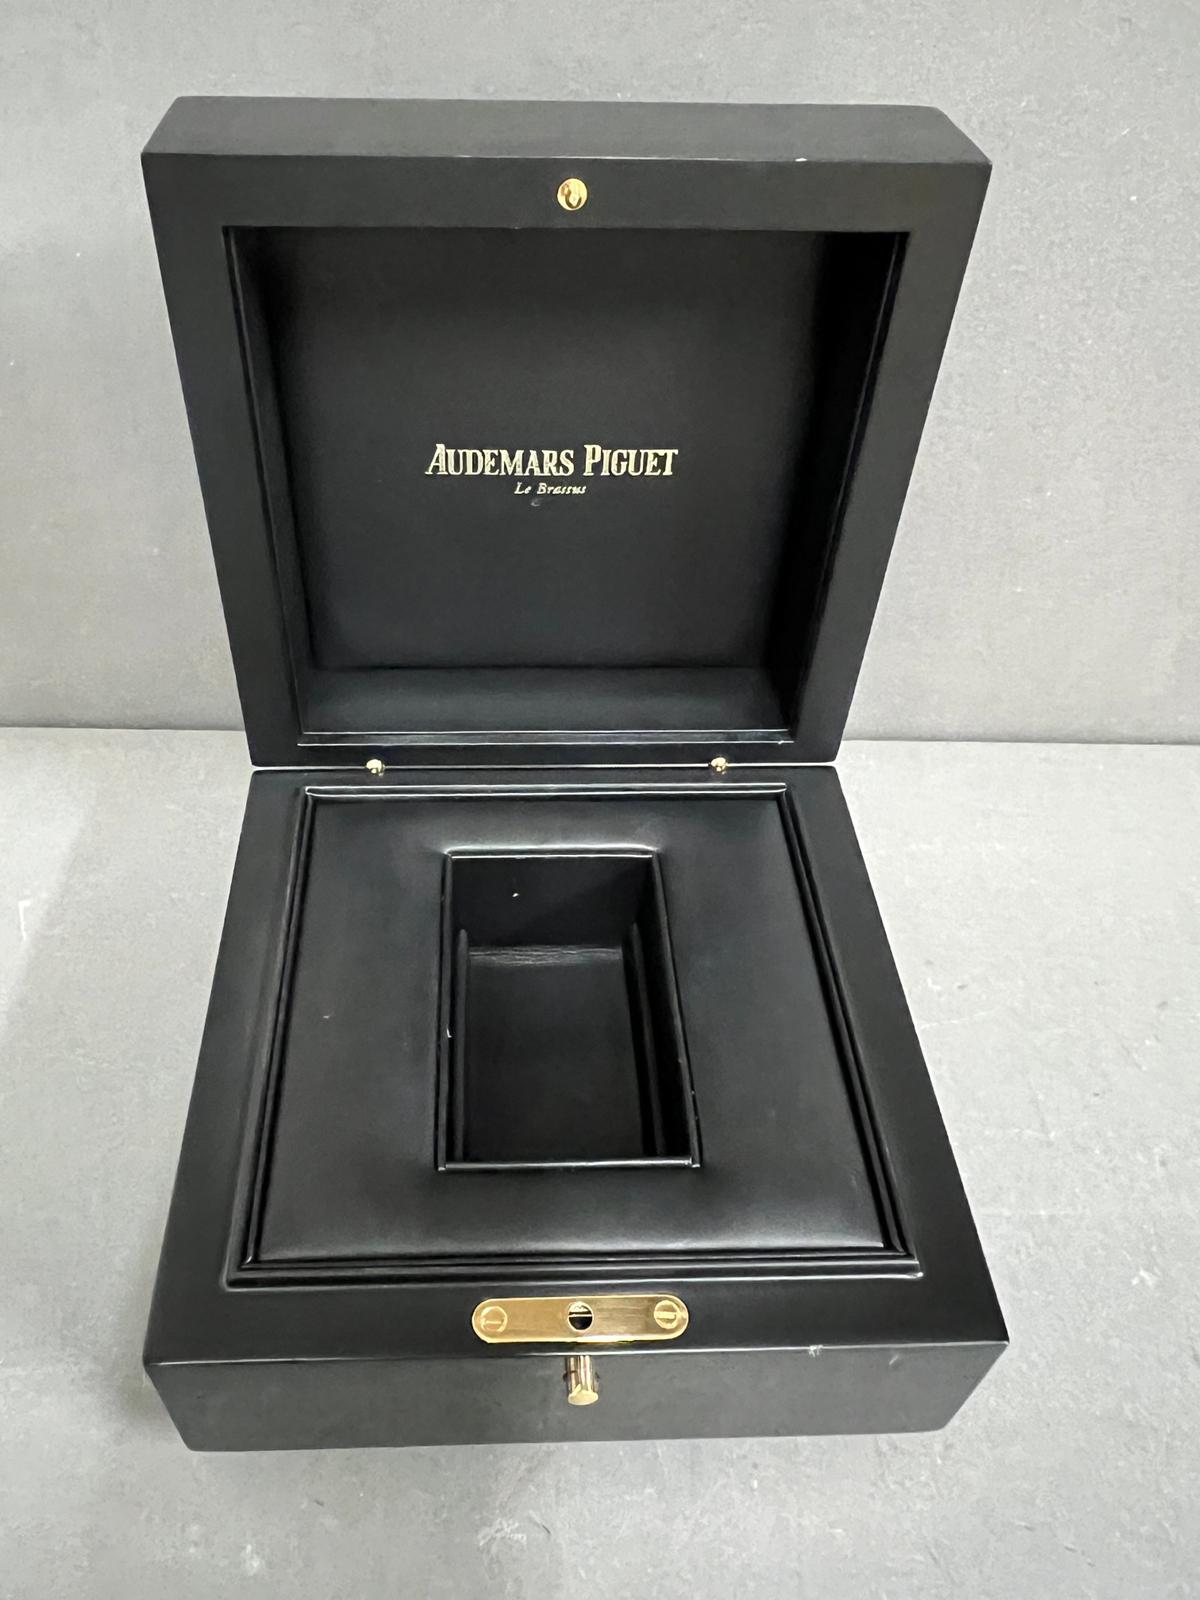 Aude mars Piquet watch box - Image 3 of 3